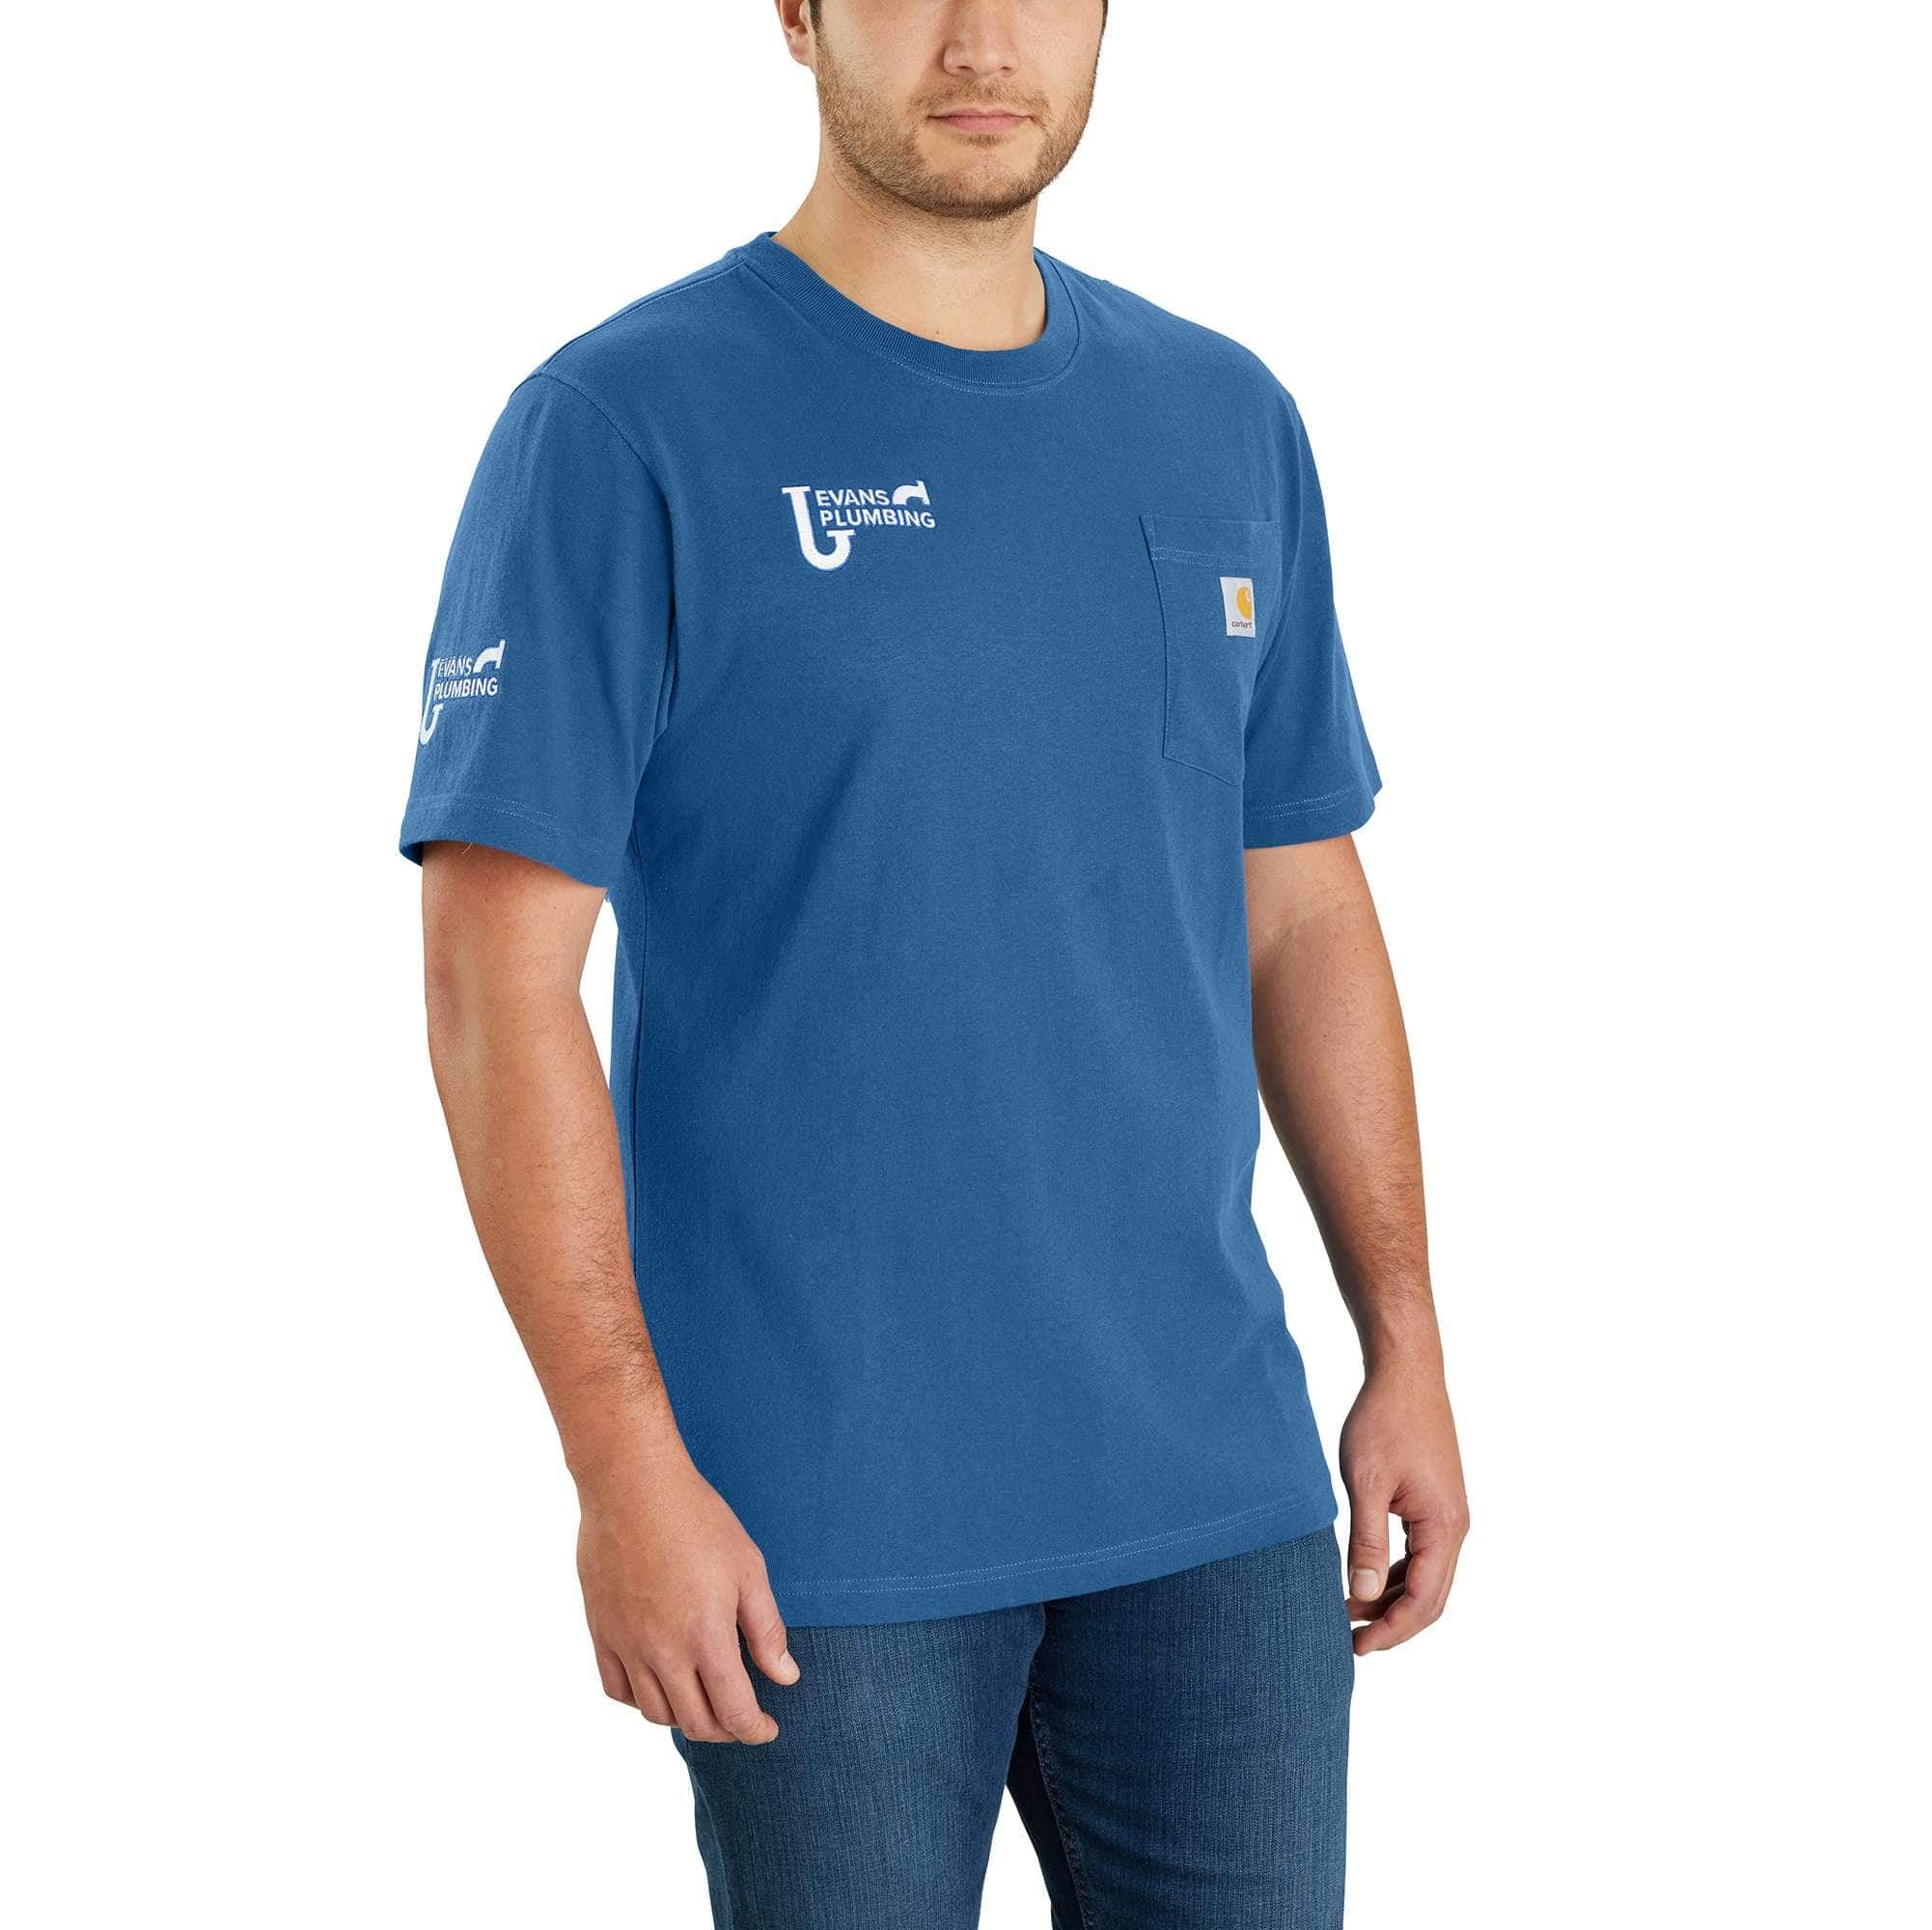 Uniform Shirts: Customizable Company Shirts | Carhartt Company Gear